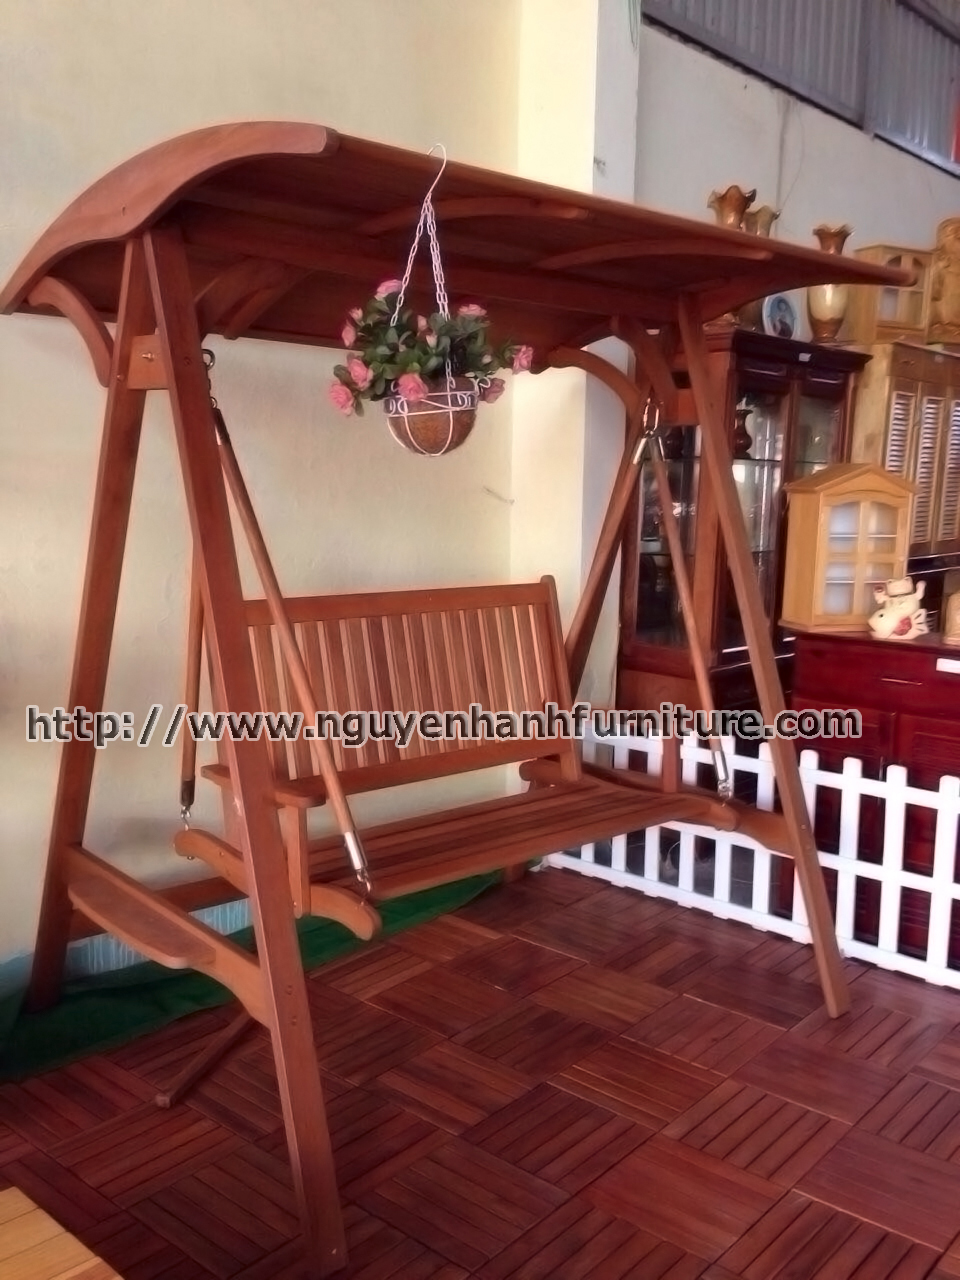 Name product: Swing chair - Dimensions: - Description:  Laos Keruing Wood